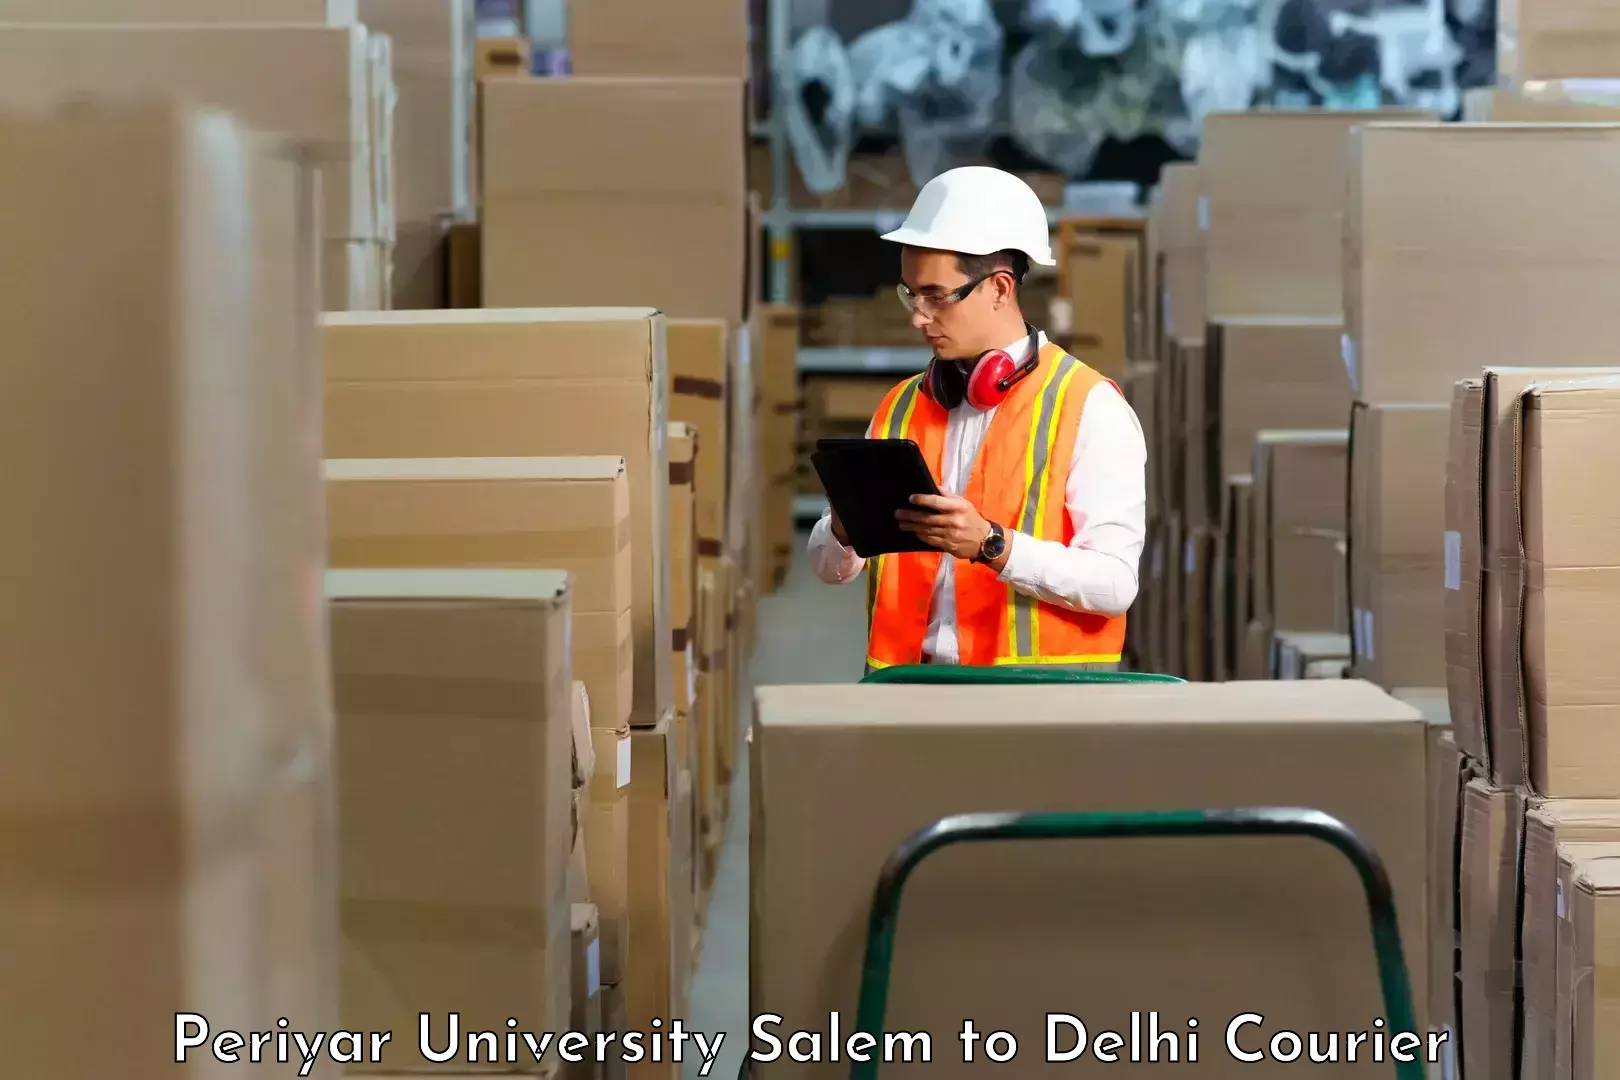 Courier service innovation Periyar University Salem to NIT Delhi